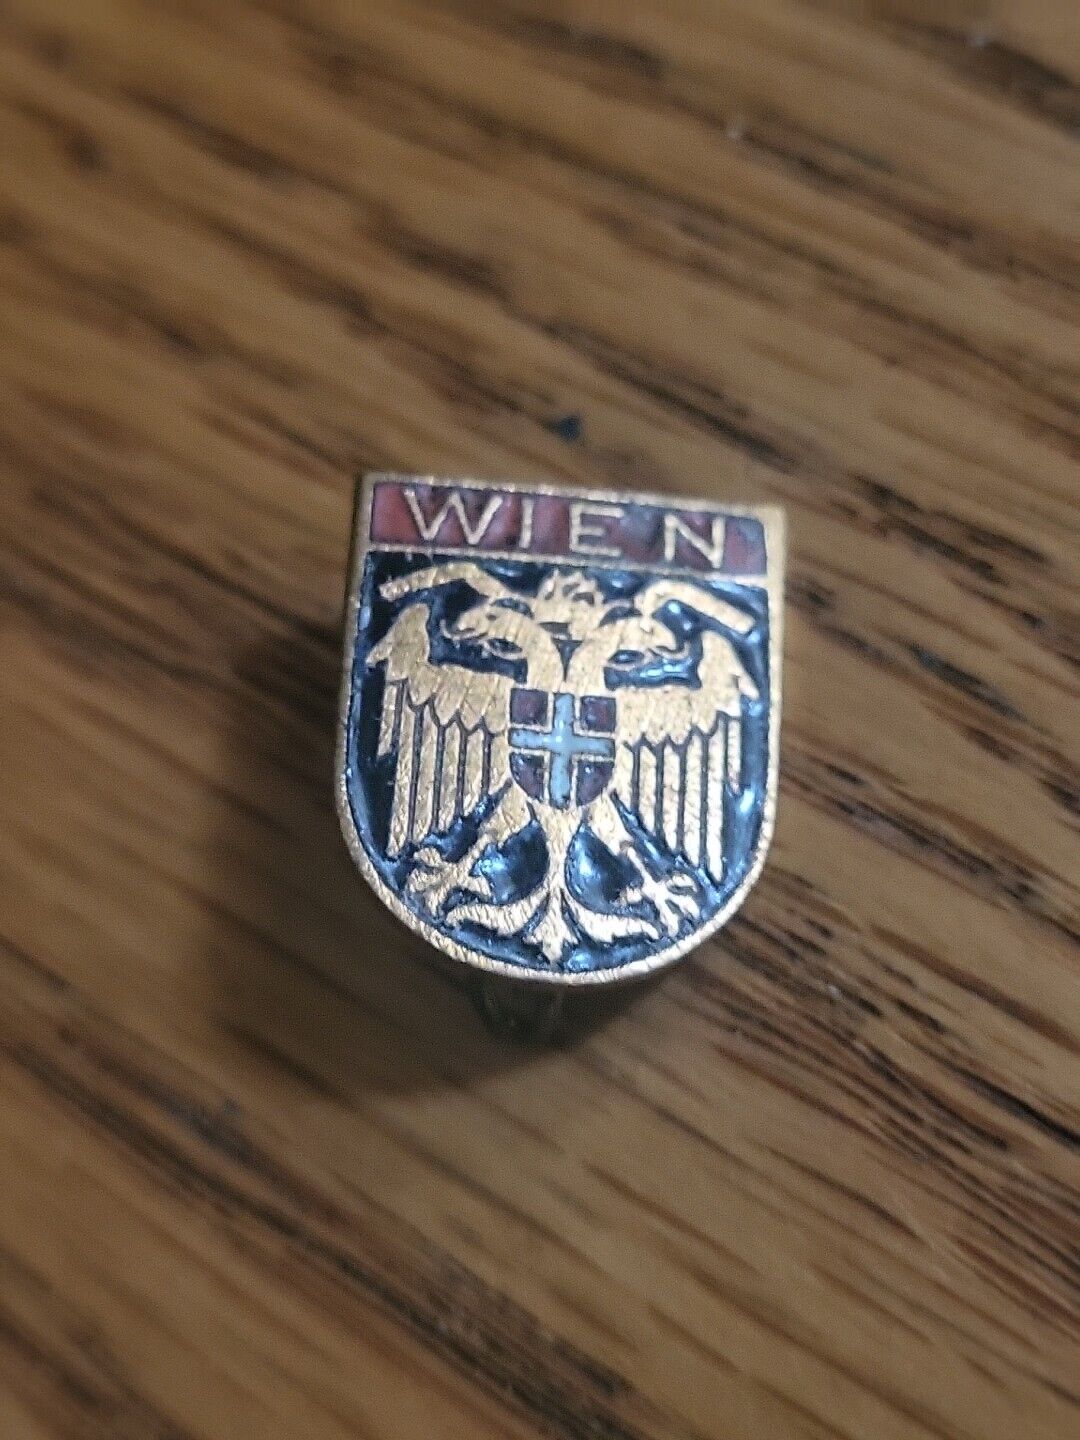 Authentic Vintage Austria WIEN Pin Brooch 